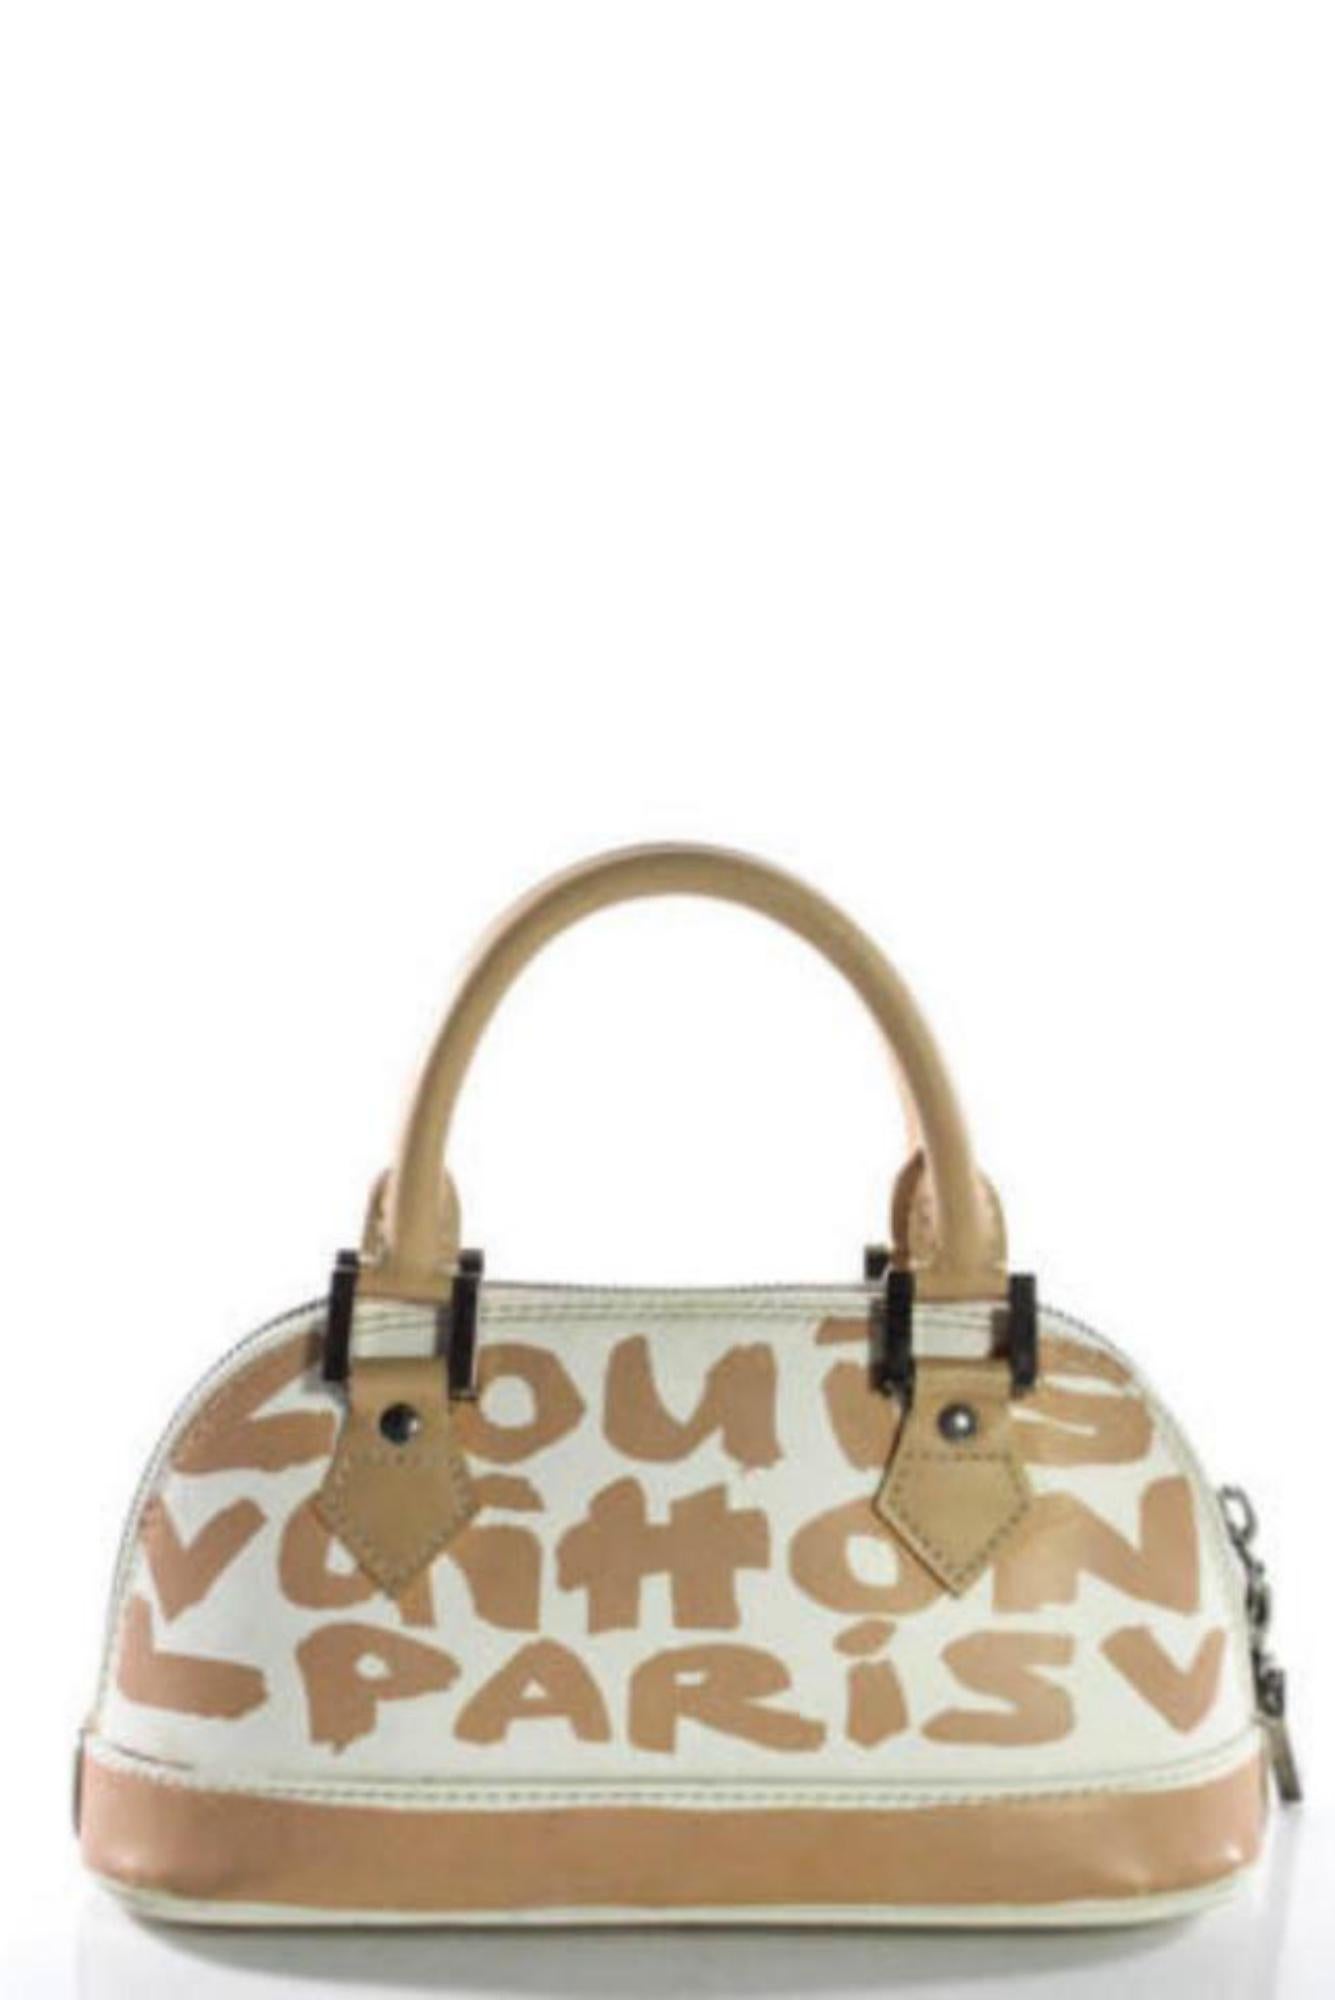 Louis Vuitton Alma Stephen Sprouse Graffiti 866394 Beige Leather Satchel For Sale 2